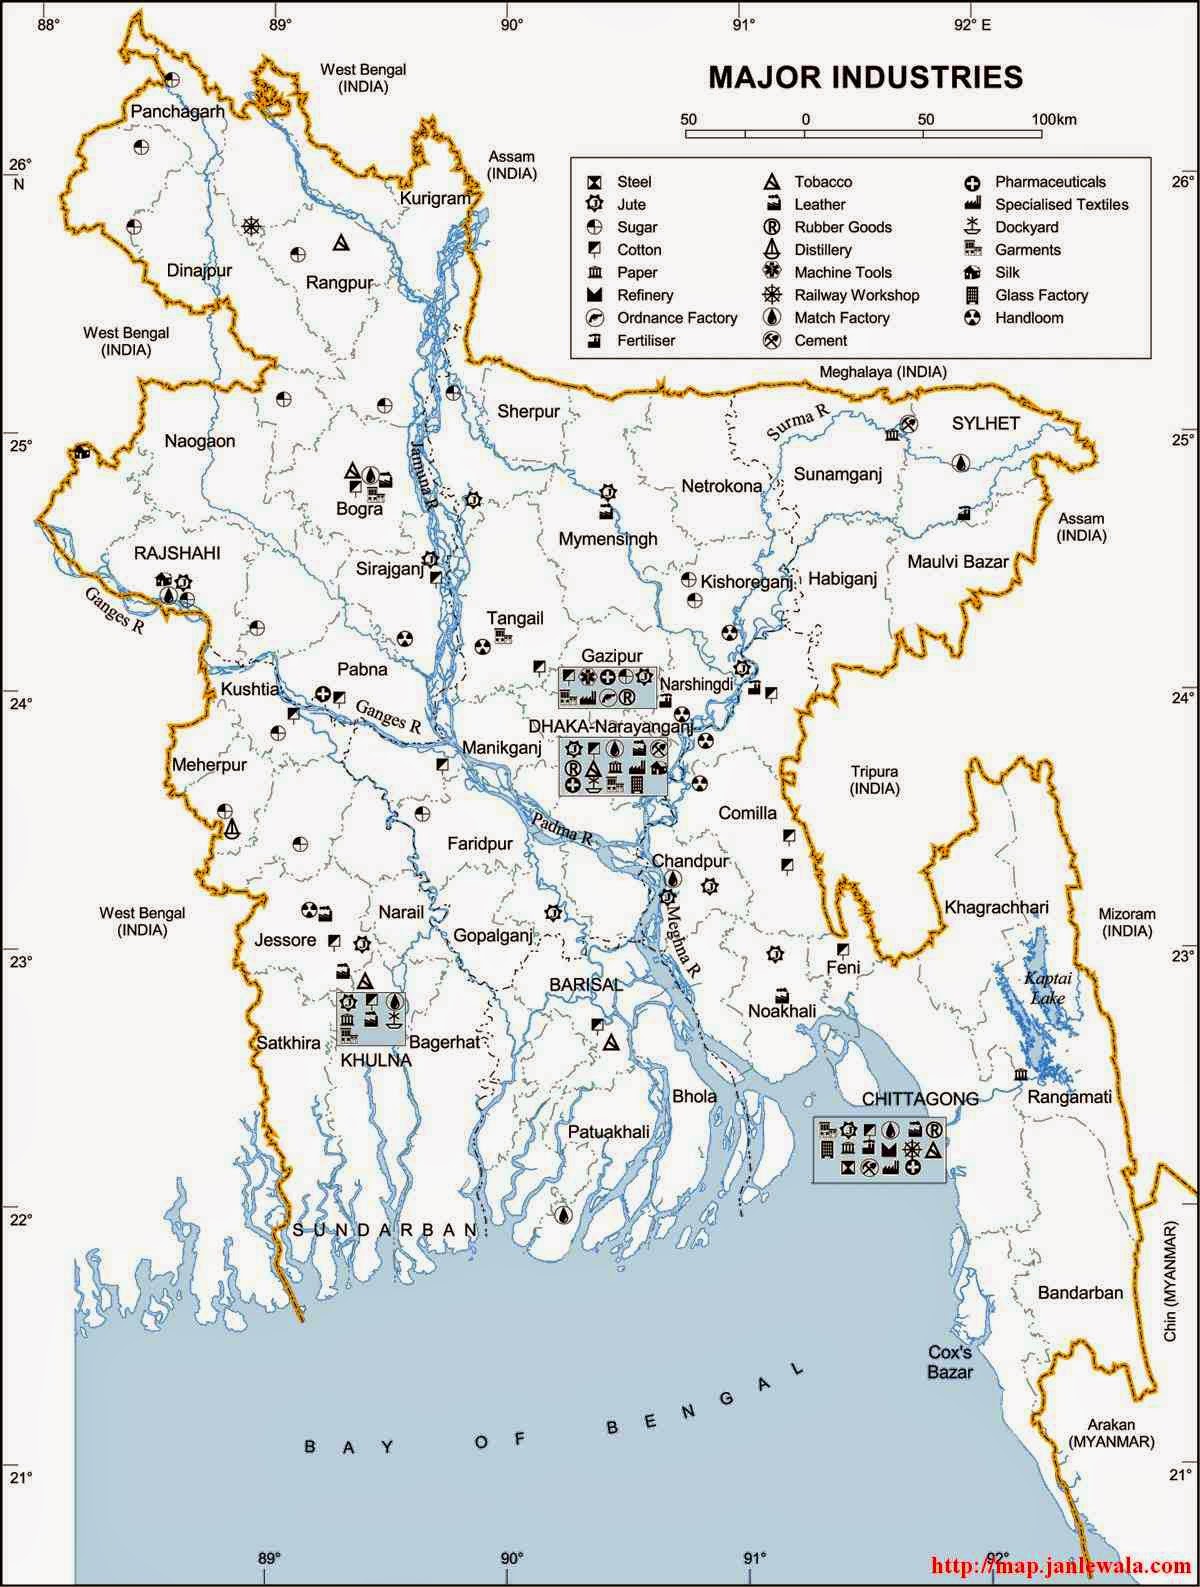 Major Industries Map of Bangladesh